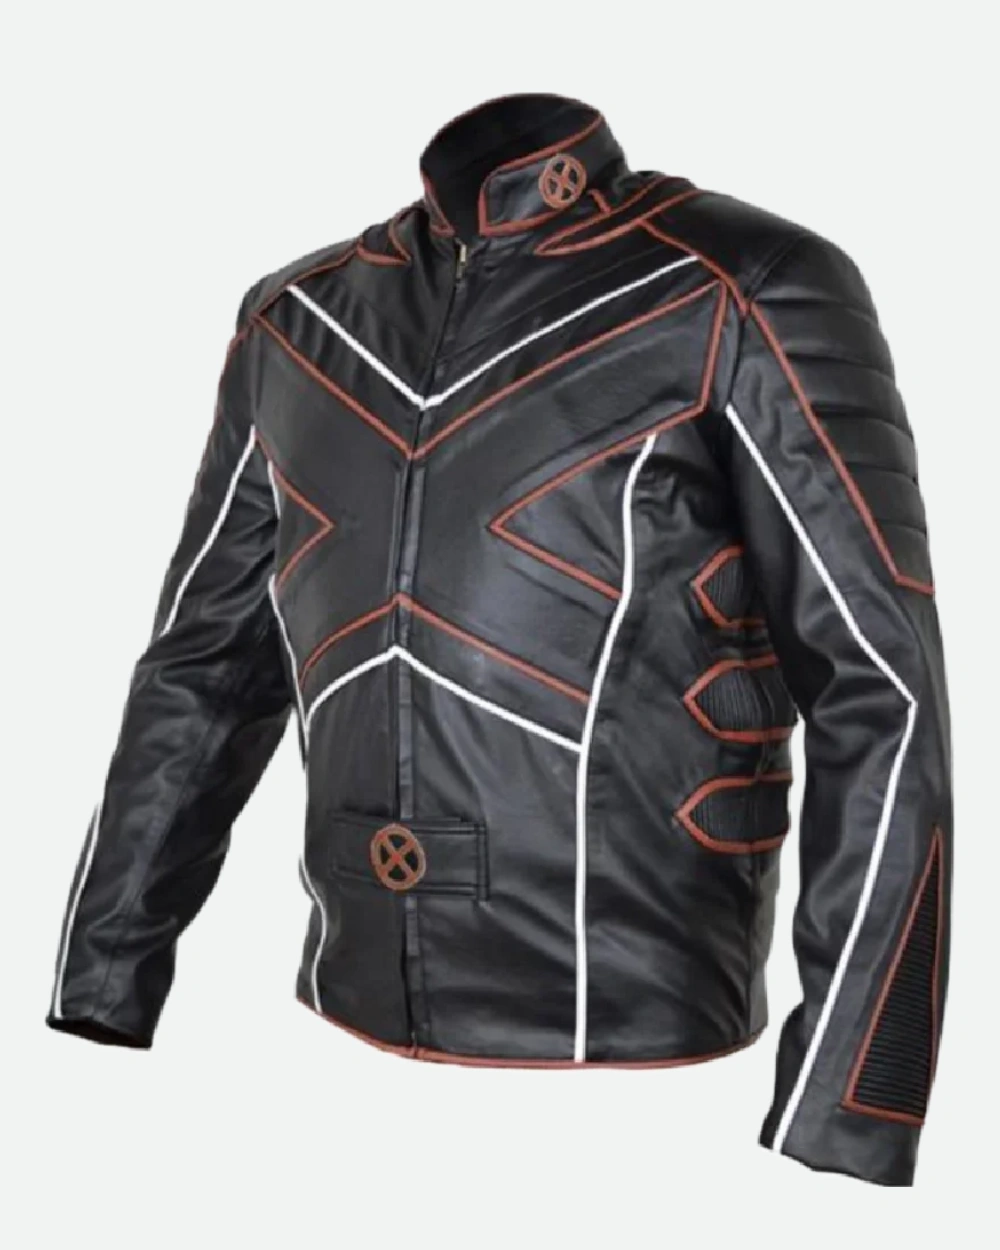 X Men 2 United Wolverine Motorcycle Jacket Side Pose